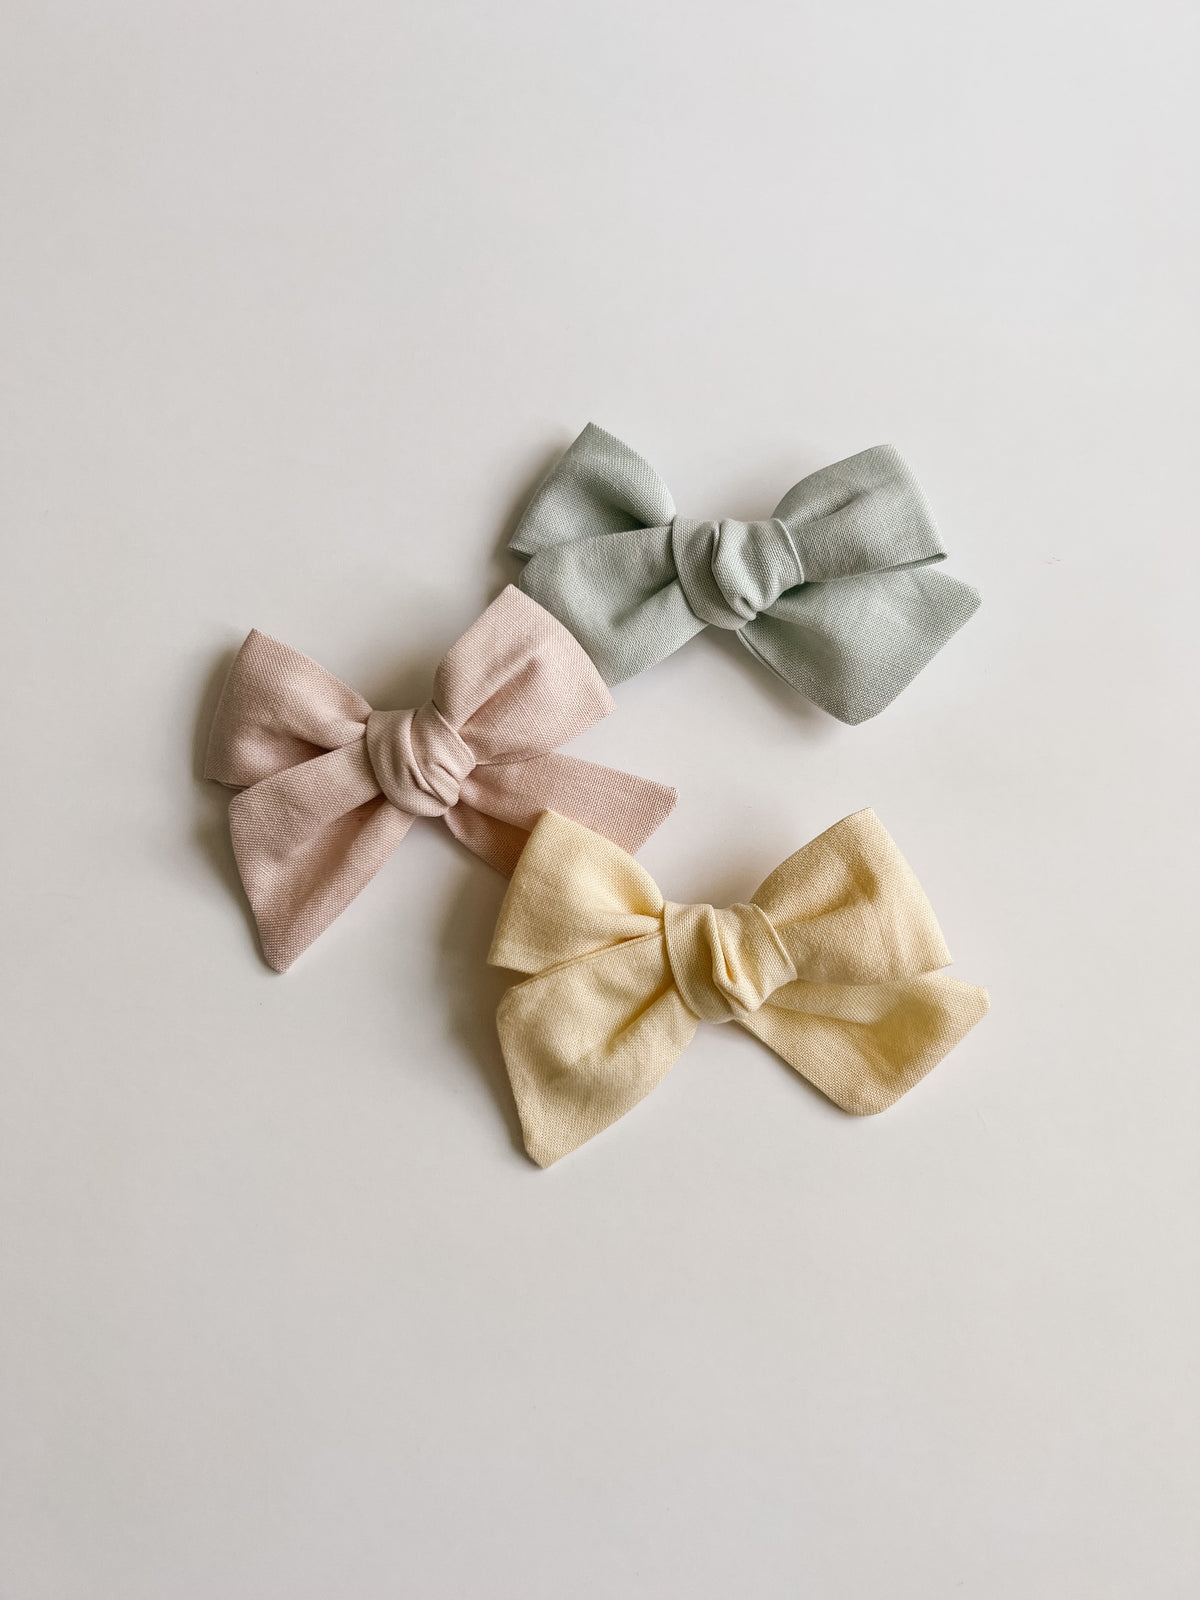 The Pastels  || Trio || Handtied Mini Bow Bundle